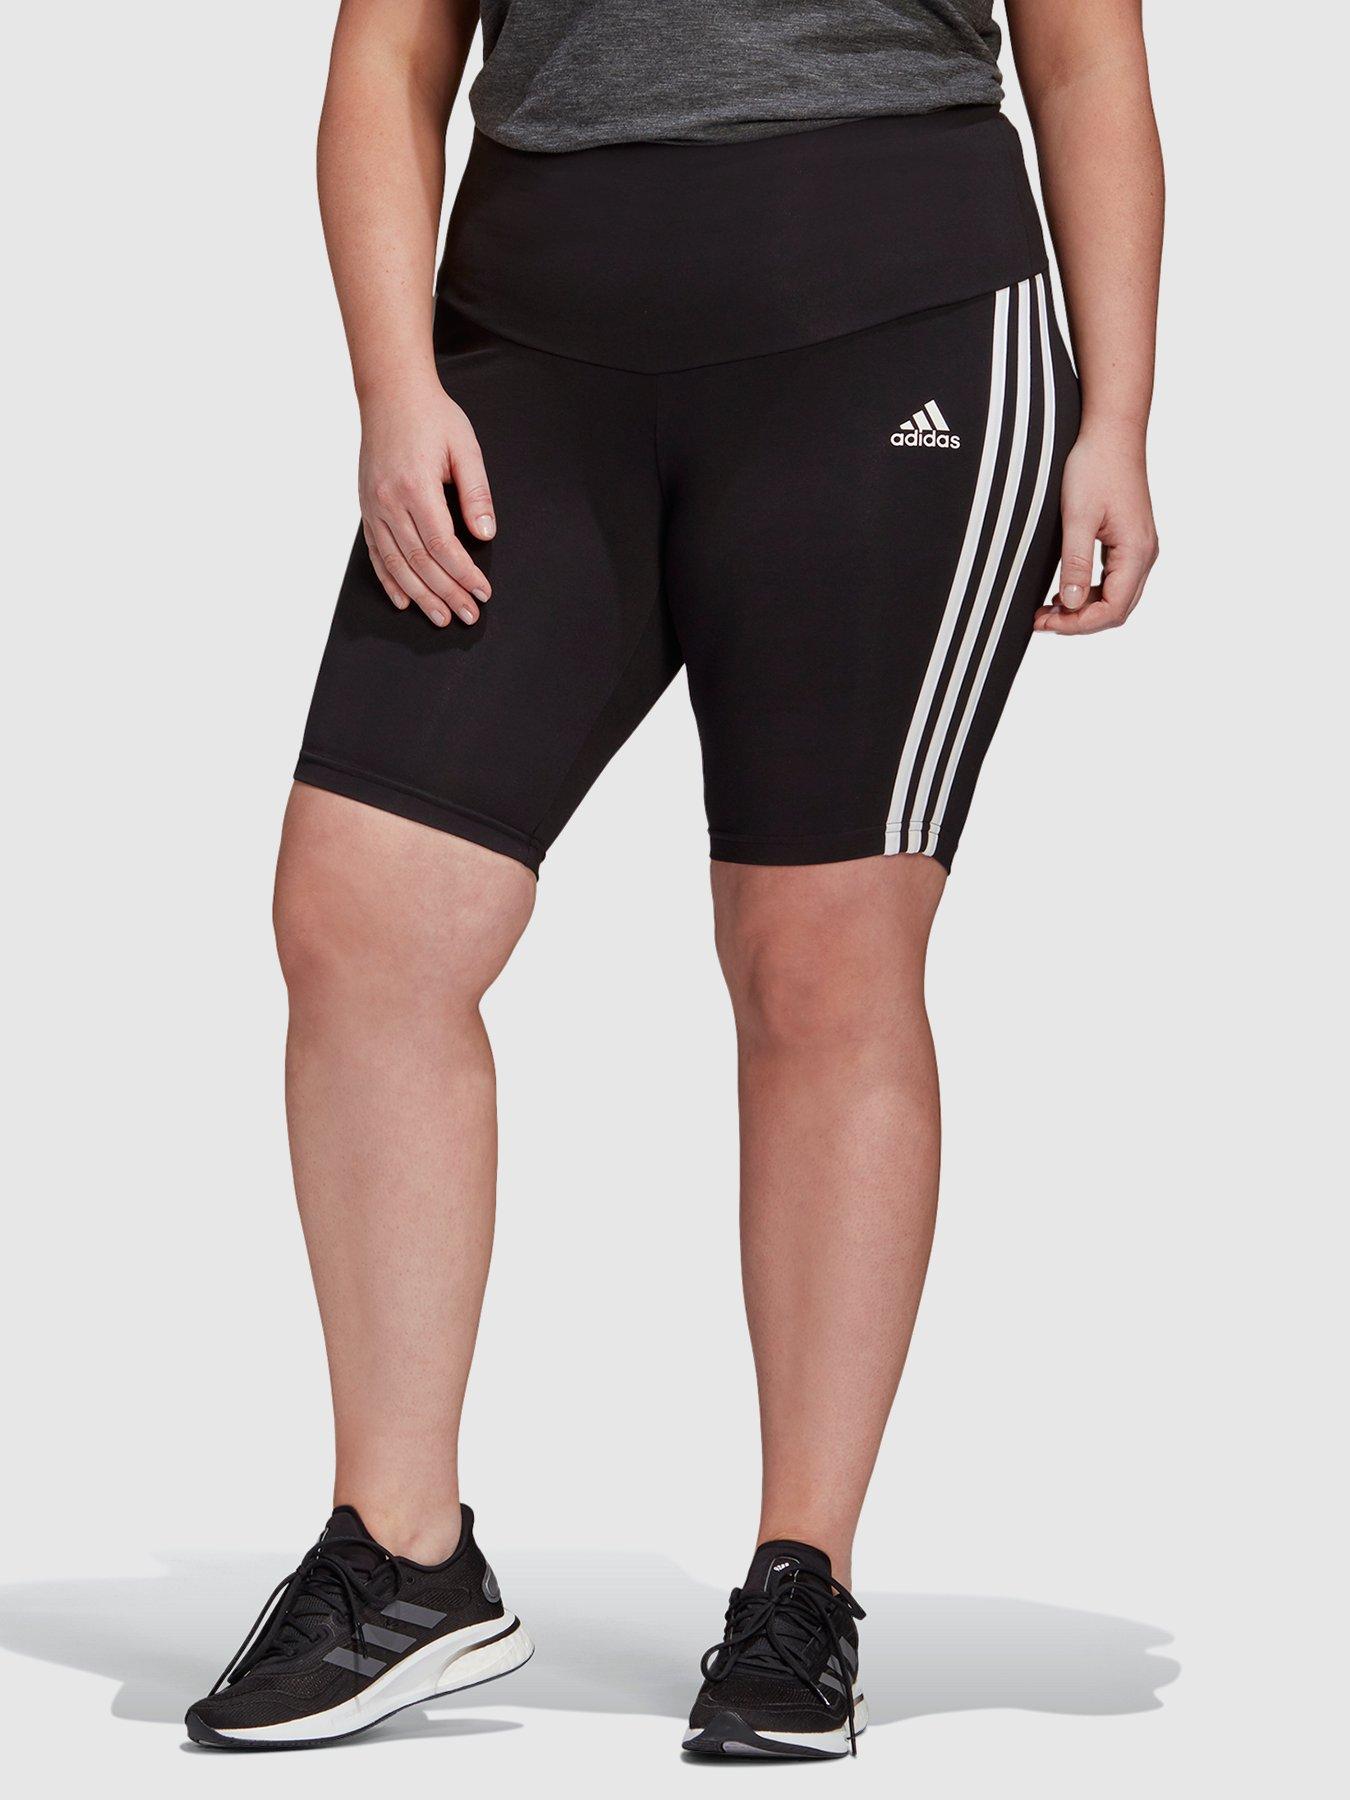 adidas plus size biker shorts